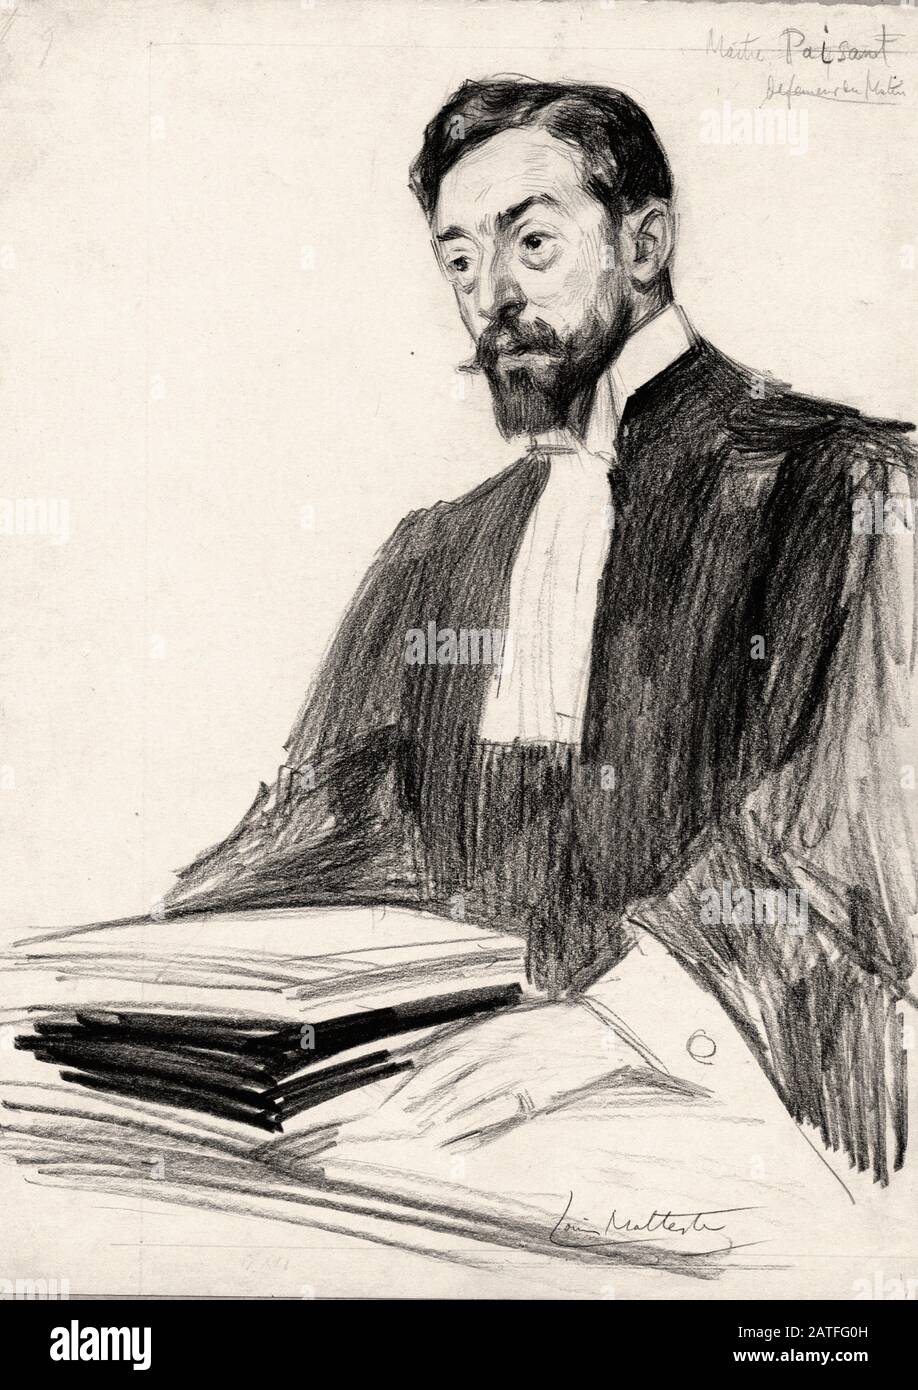 The Dreyfus Affair 1894-1906 -   Maitre Paisant - court drawing Stock Photo